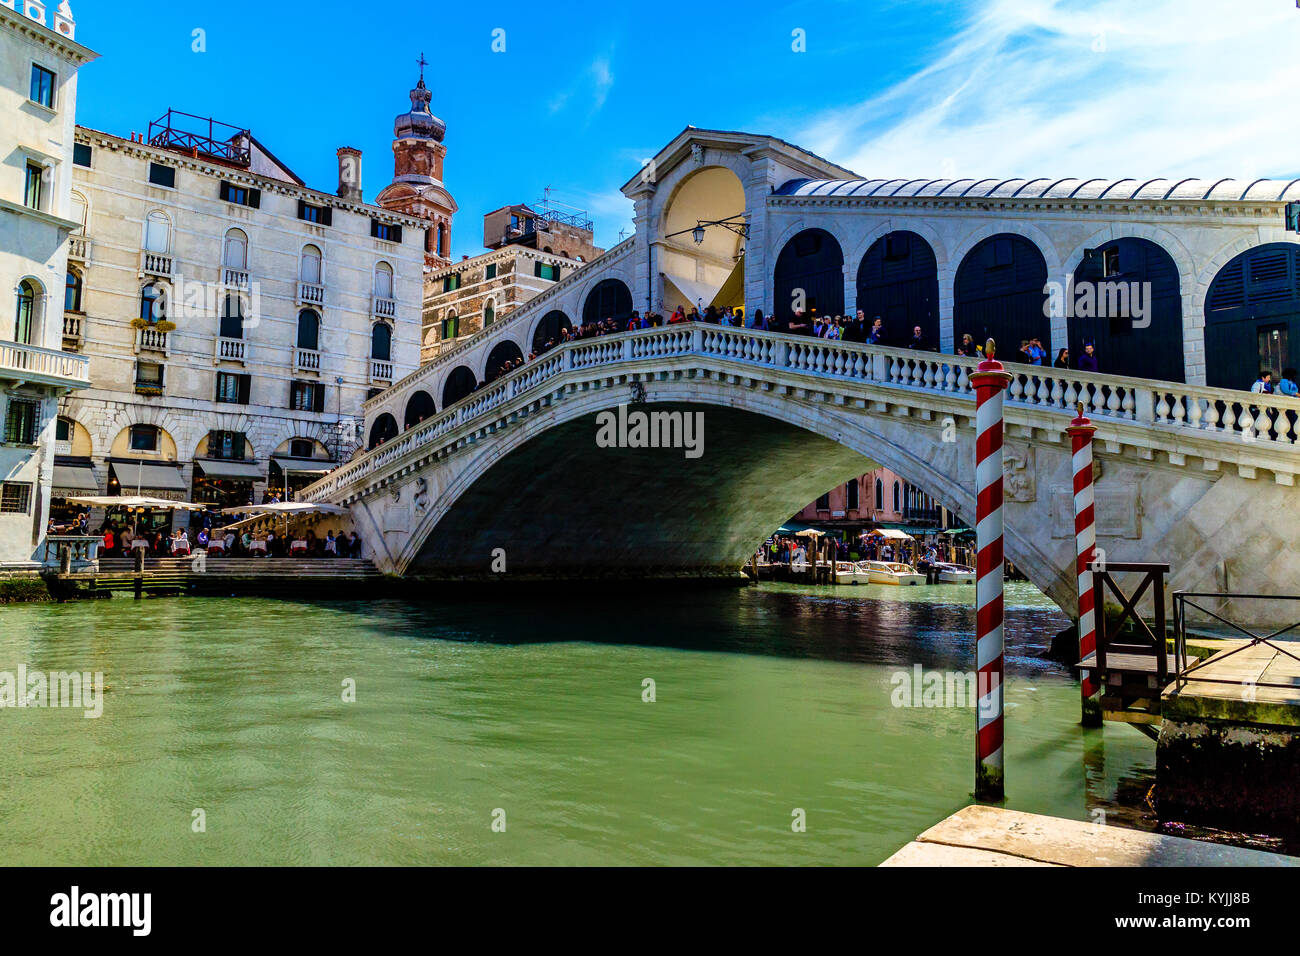 The Rialto Bridge over the Grand Canal, Venice, Italy. 2017. Stock Photo